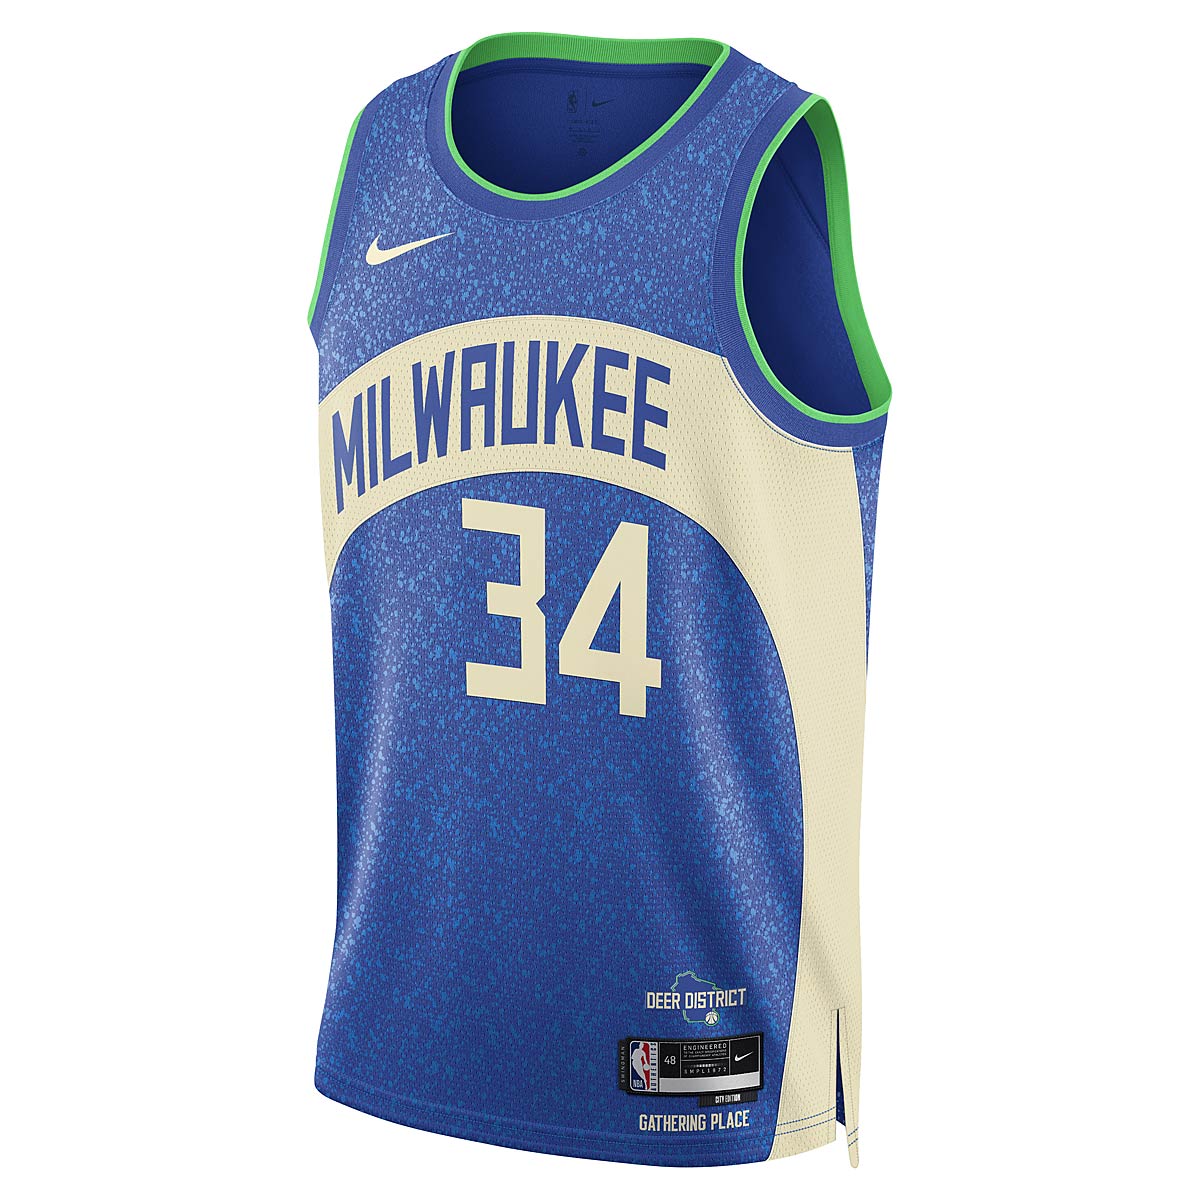 Nike NBA Milwaukee Bucks Dri-fit City Edition Swingman Jersey Giannis Antetokounmpo, Photo Blau/schwarz-weiß-university Rot 2XL